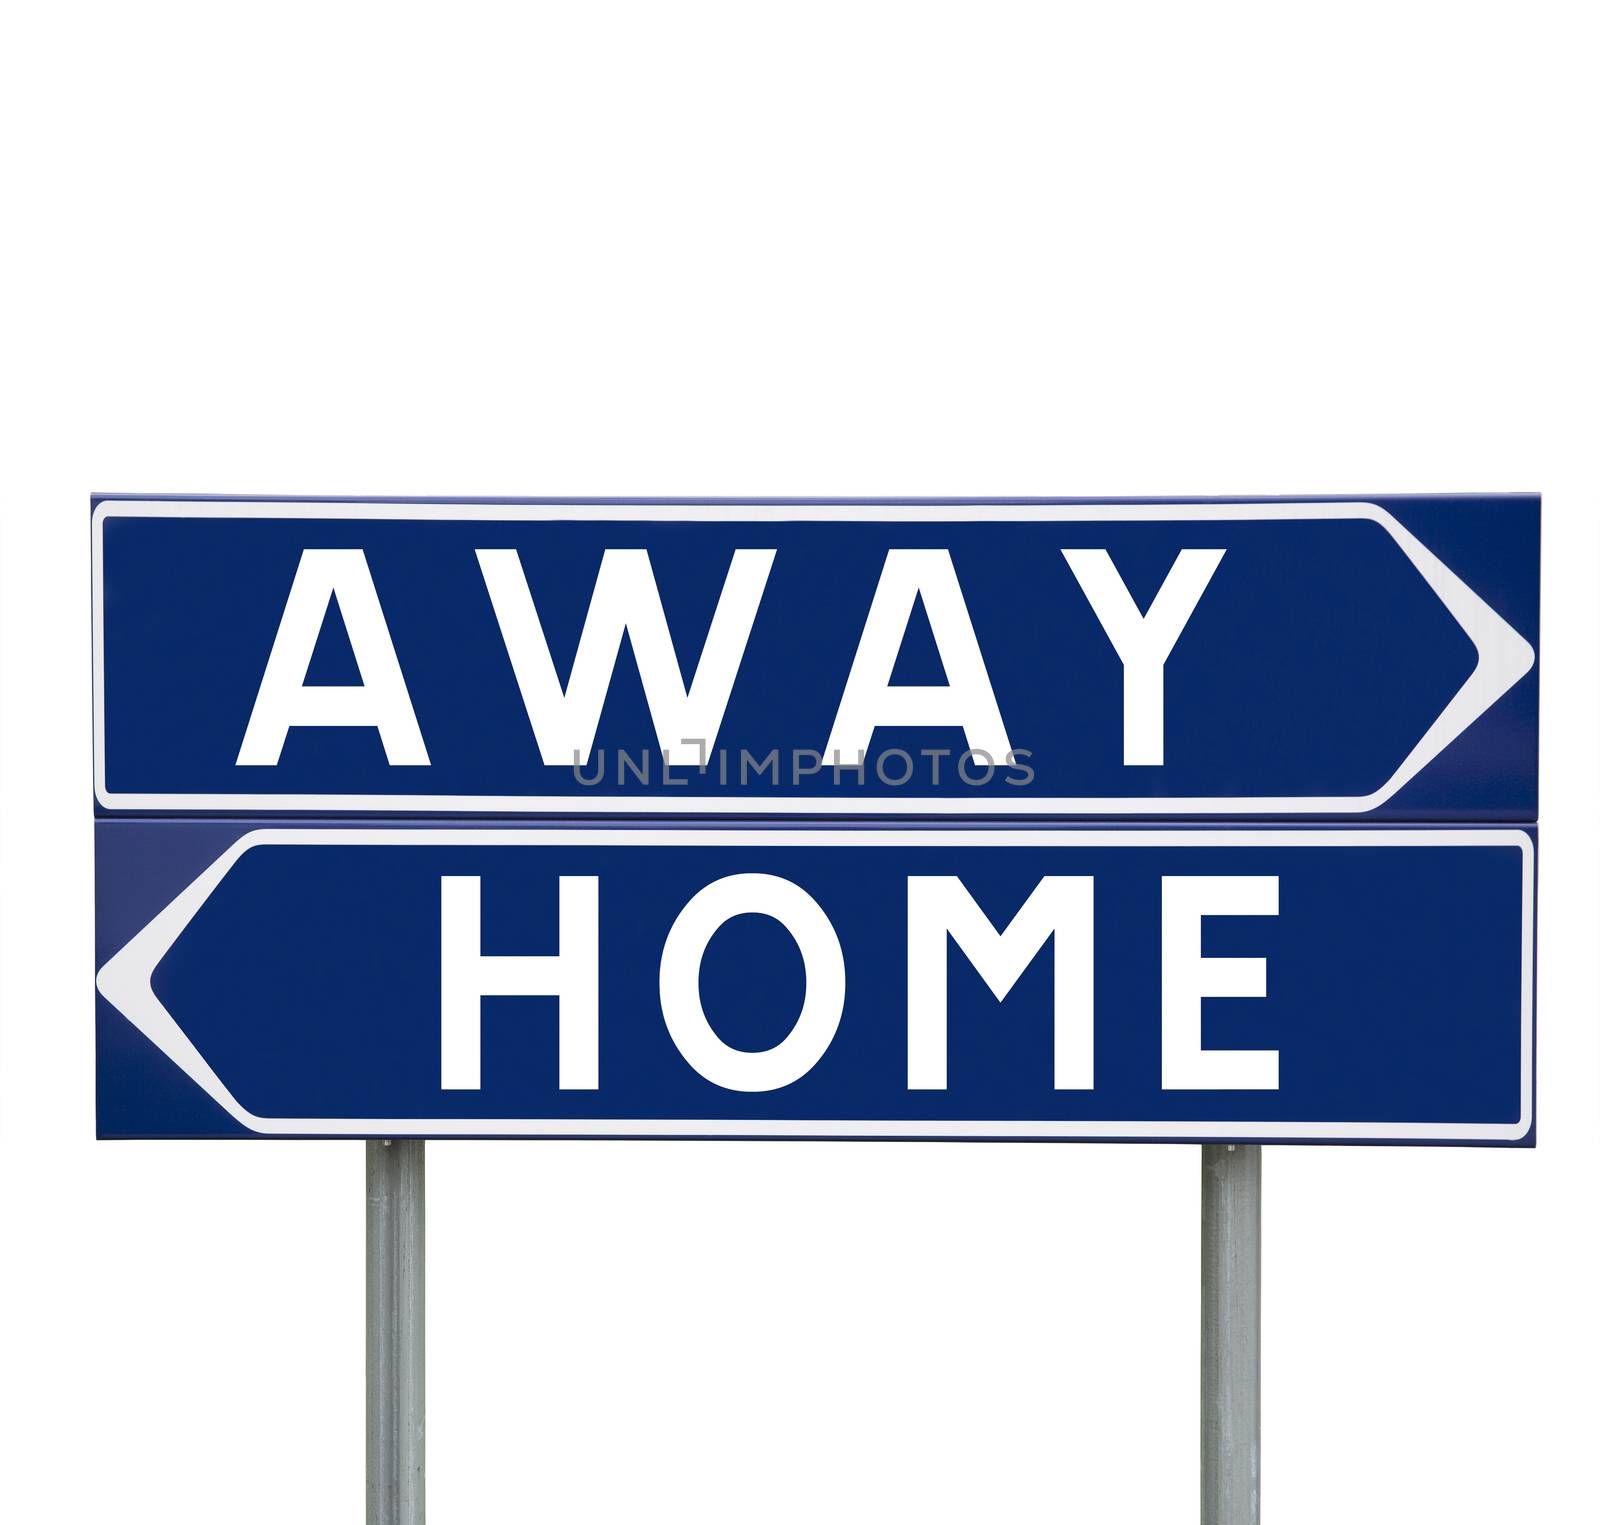 Home or Away by gemenacom